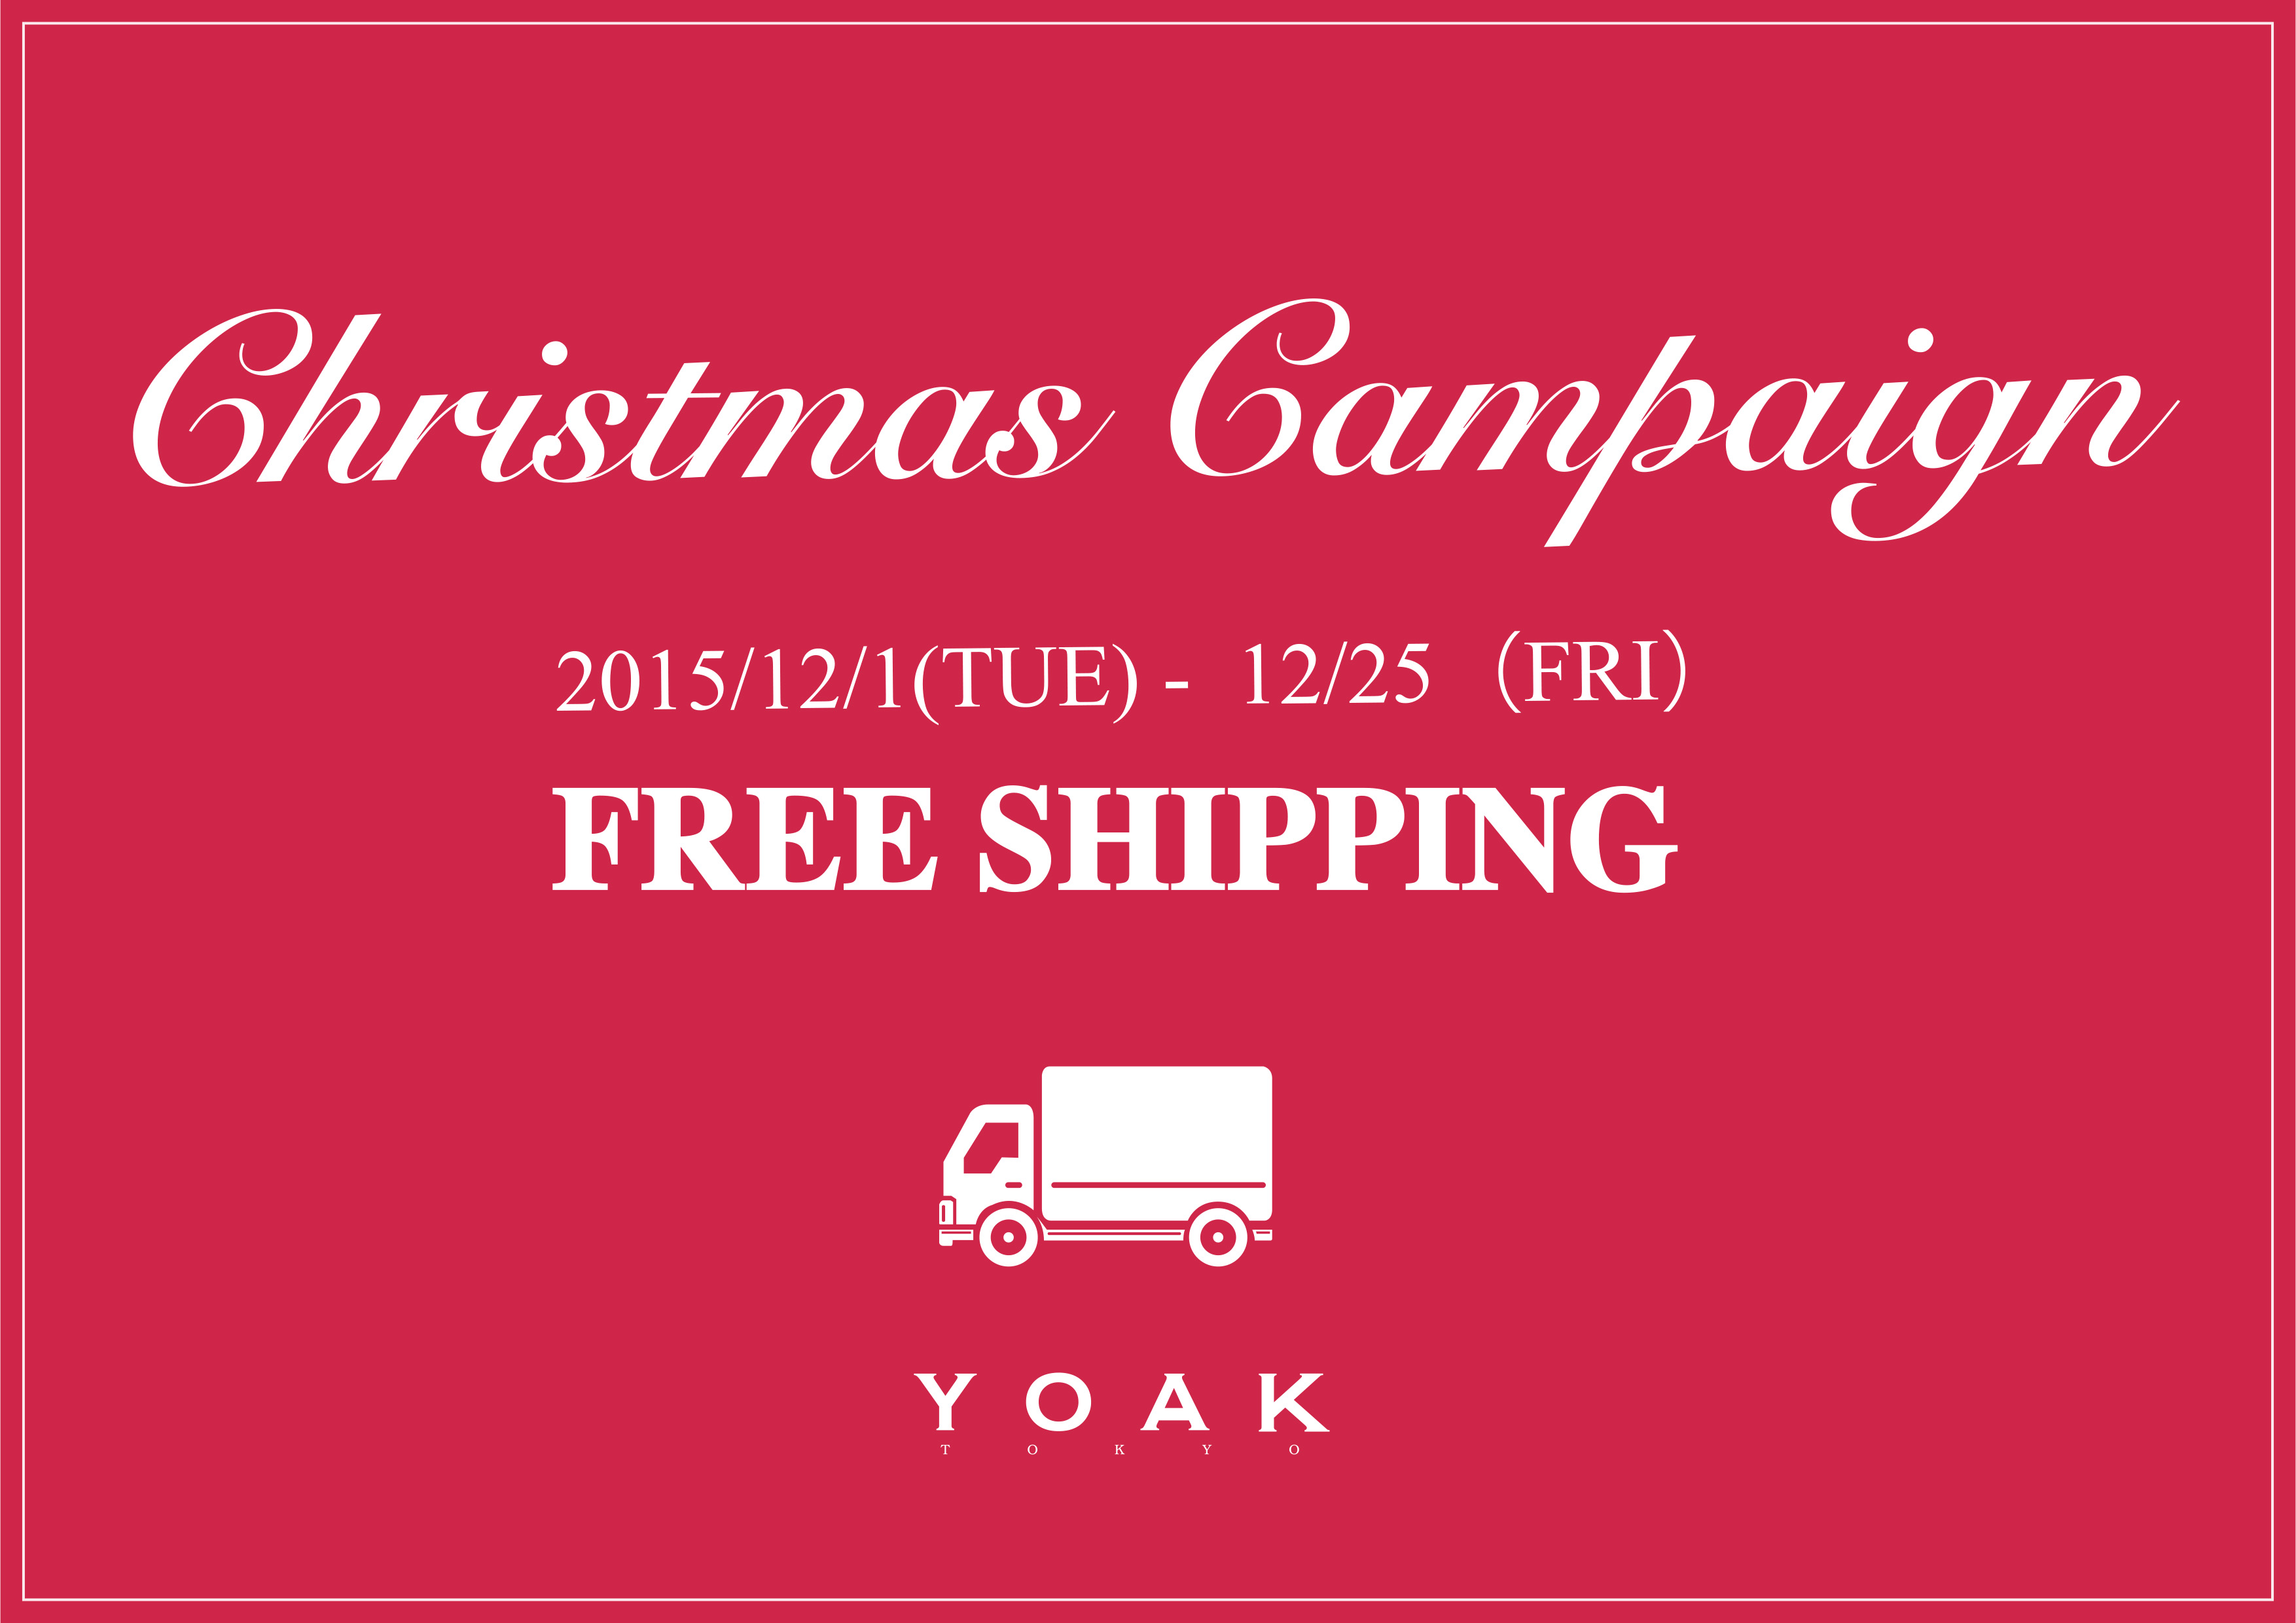 YOAK Christmas Campaign!!